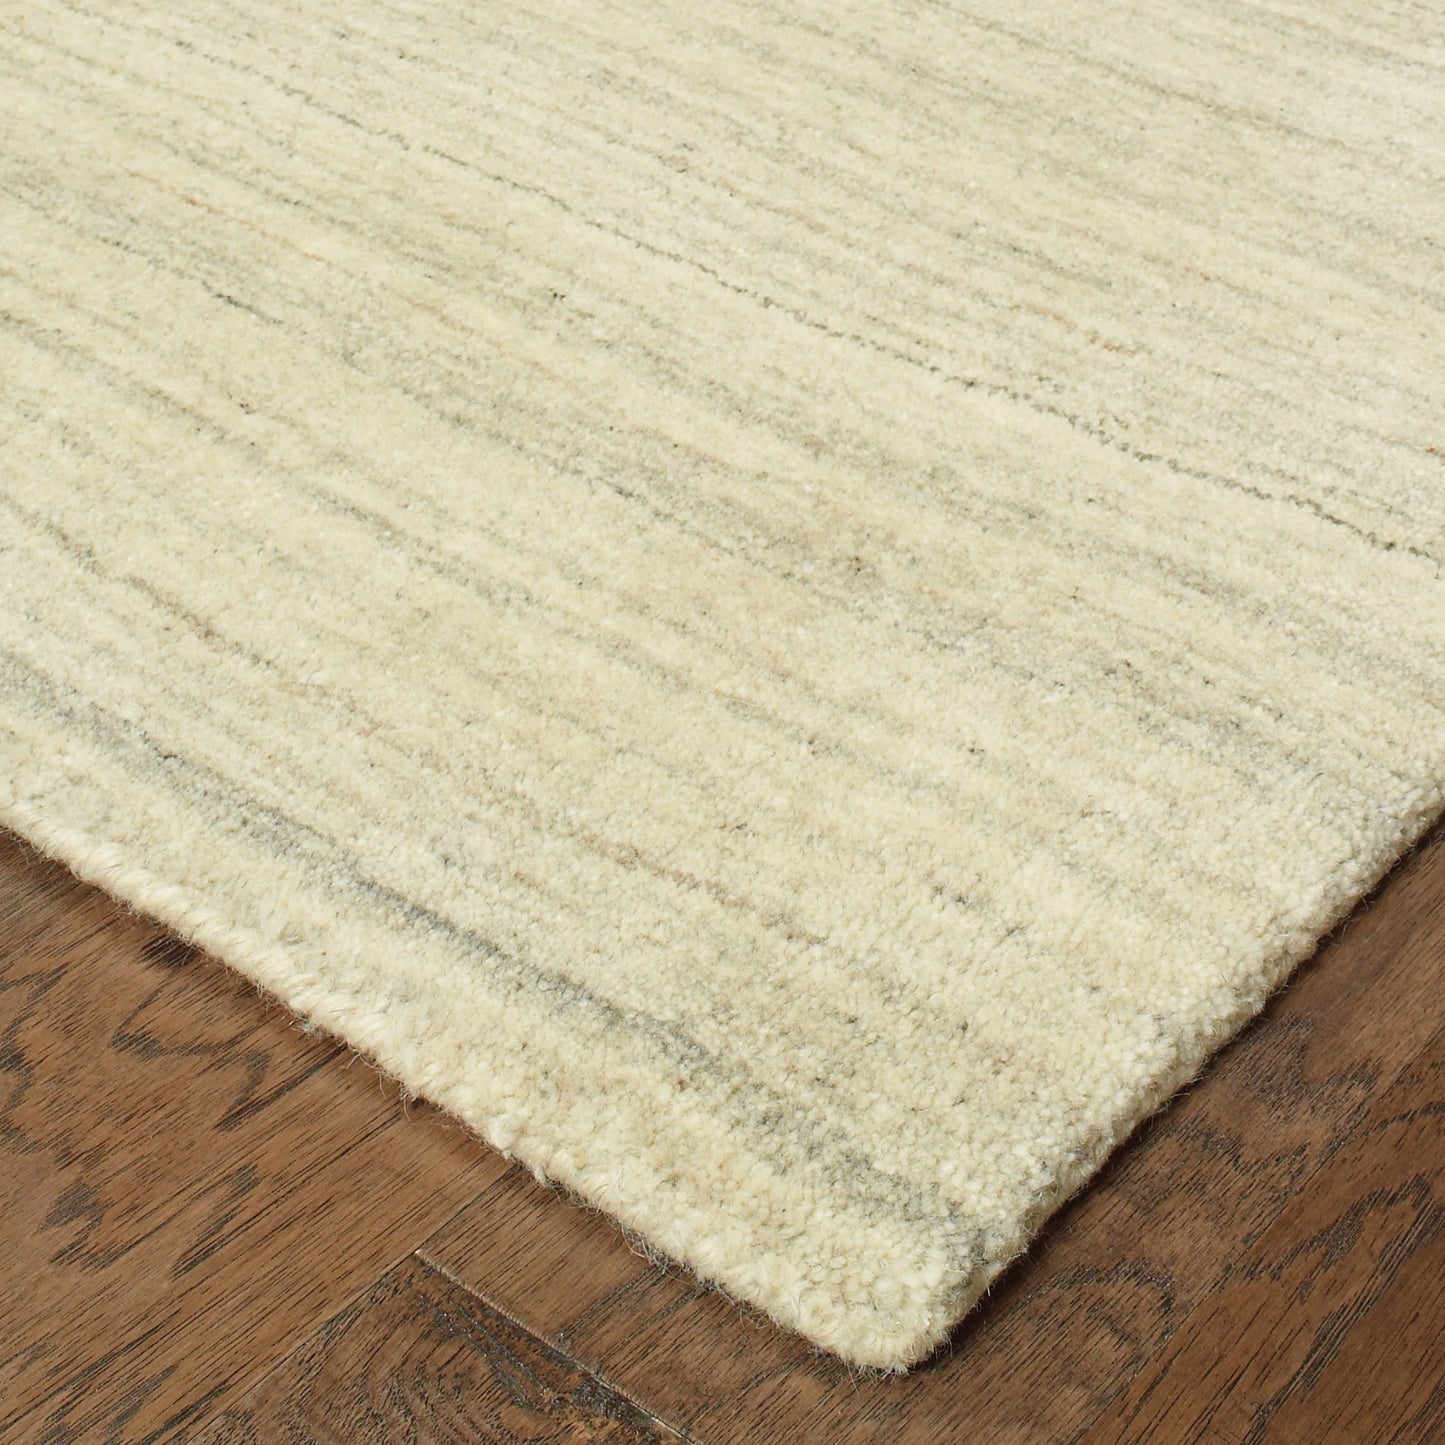 INFUSED Distressed Hand-Tufted Wool Indoor Area Rug by Oriental Weavers